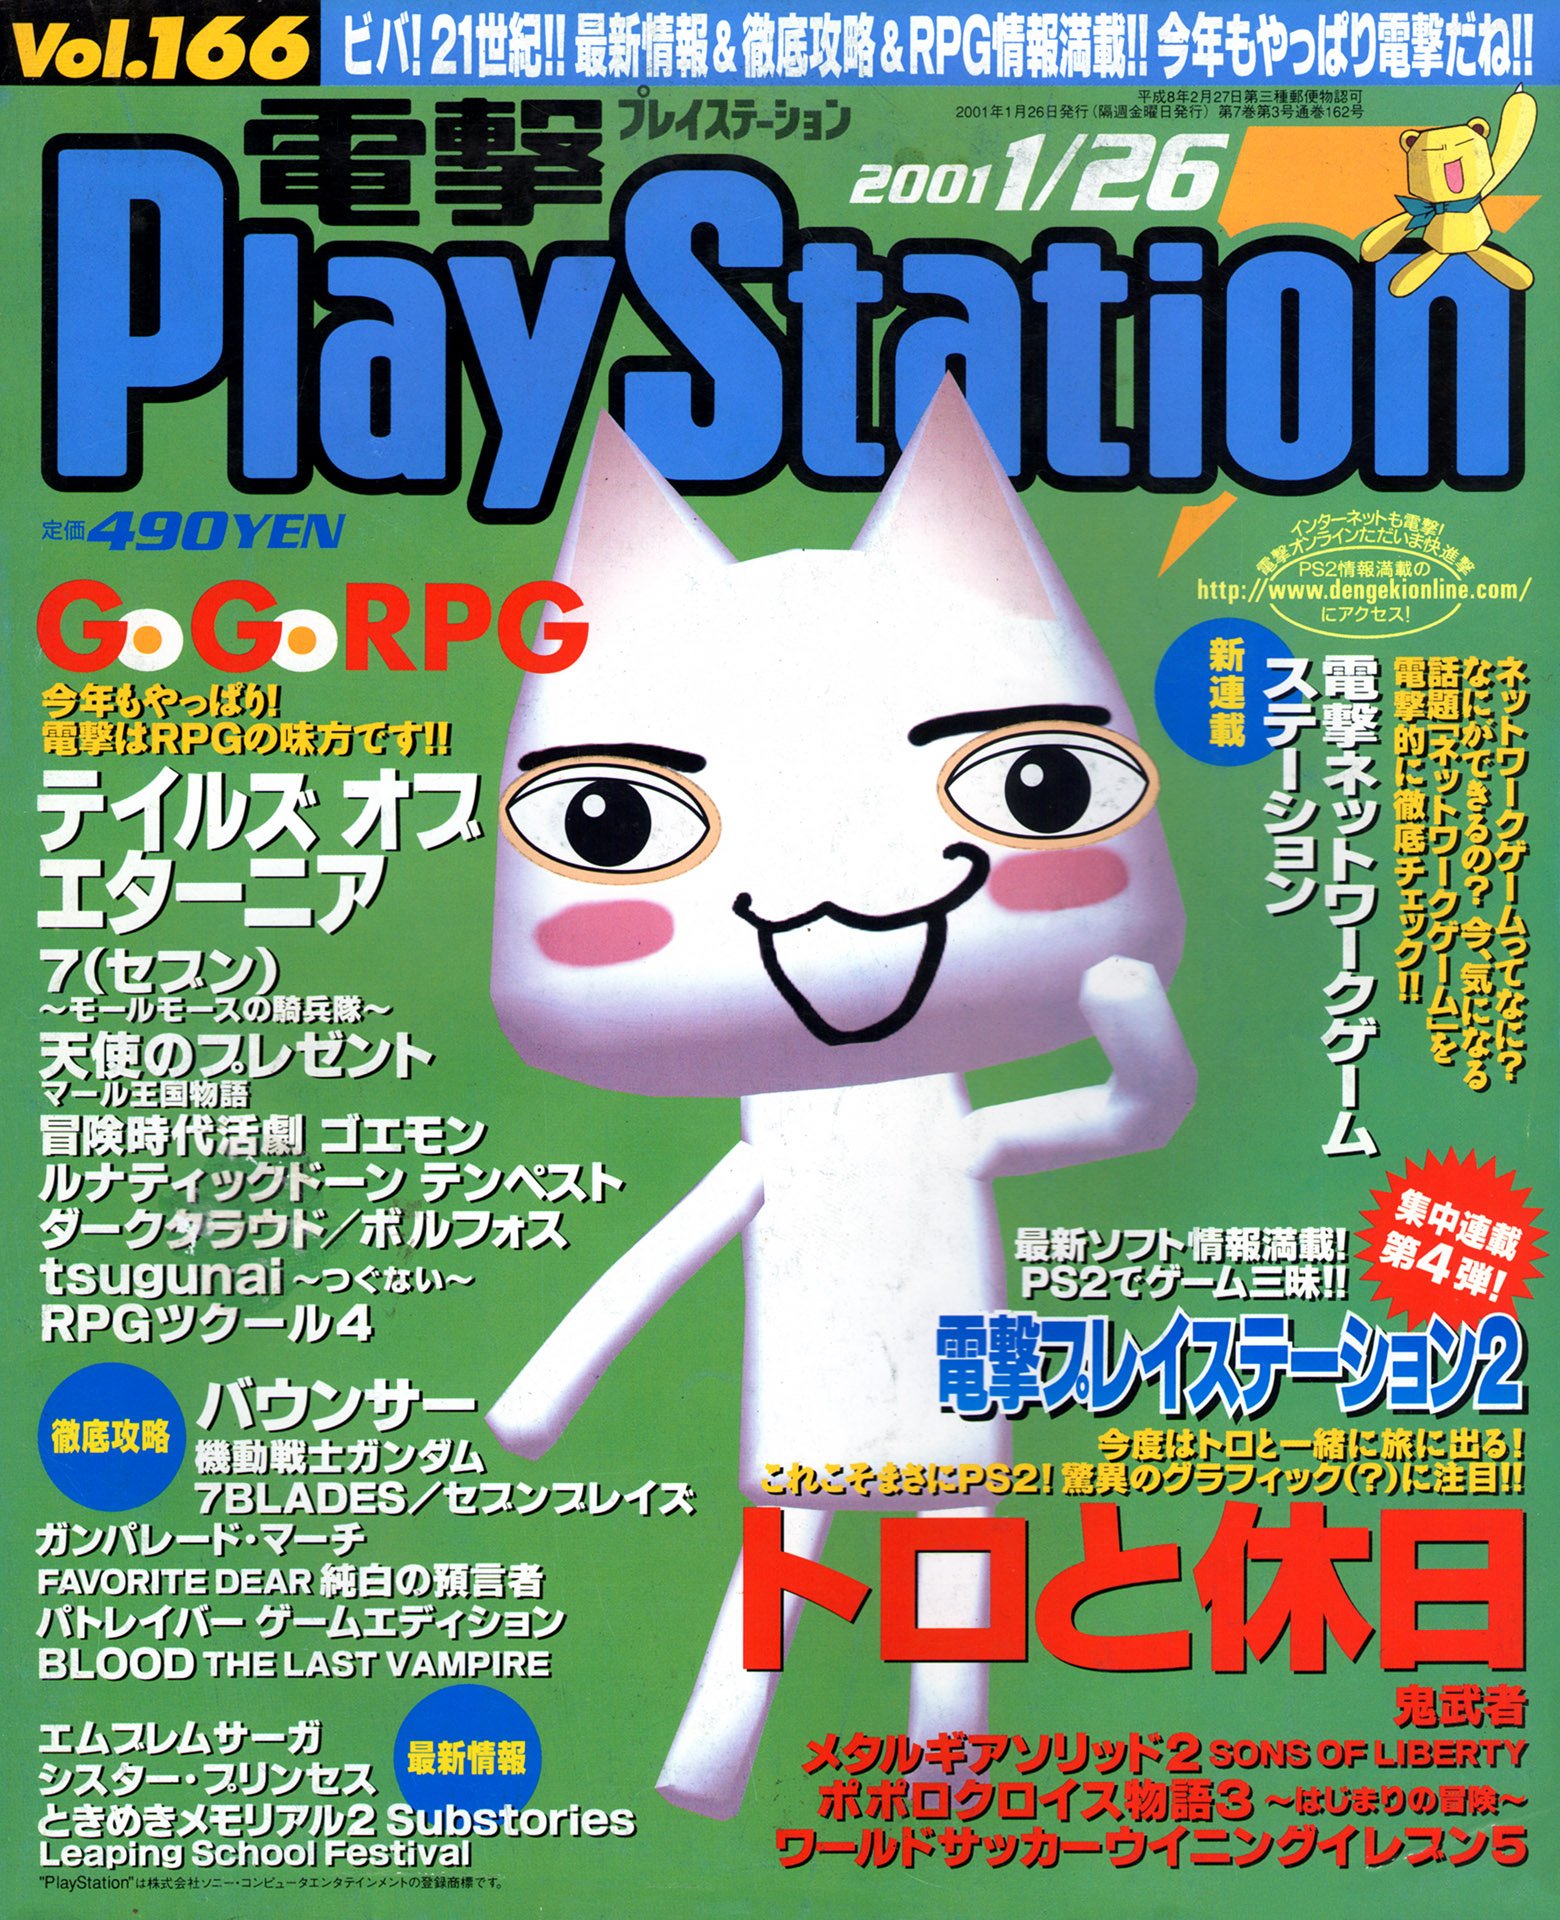 Dengeki Playstation Issue 166 Dengeki Playstation Retromags Community